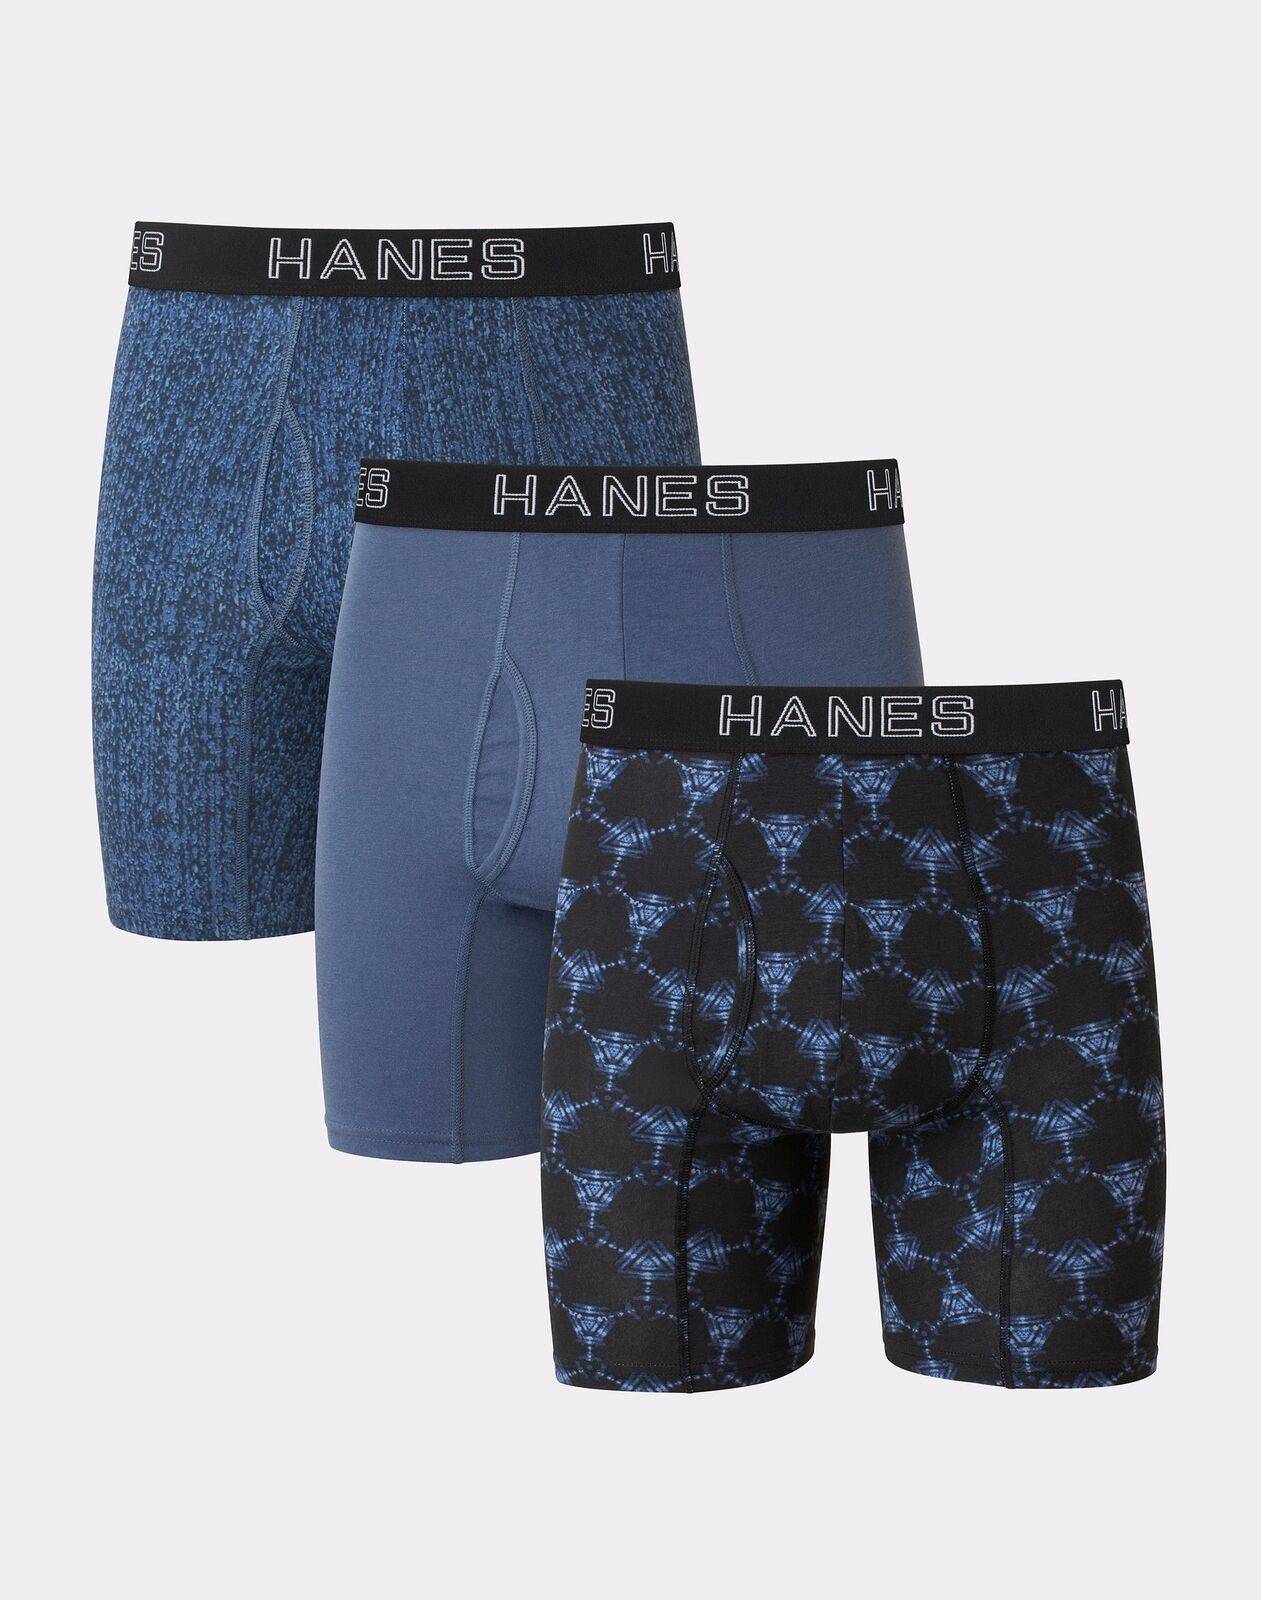 Hanes Men's Boxer Brief 4-Pack Ultimate Comfort Flex Fit Total Support  Pouch Black/Grey -M - Invastor